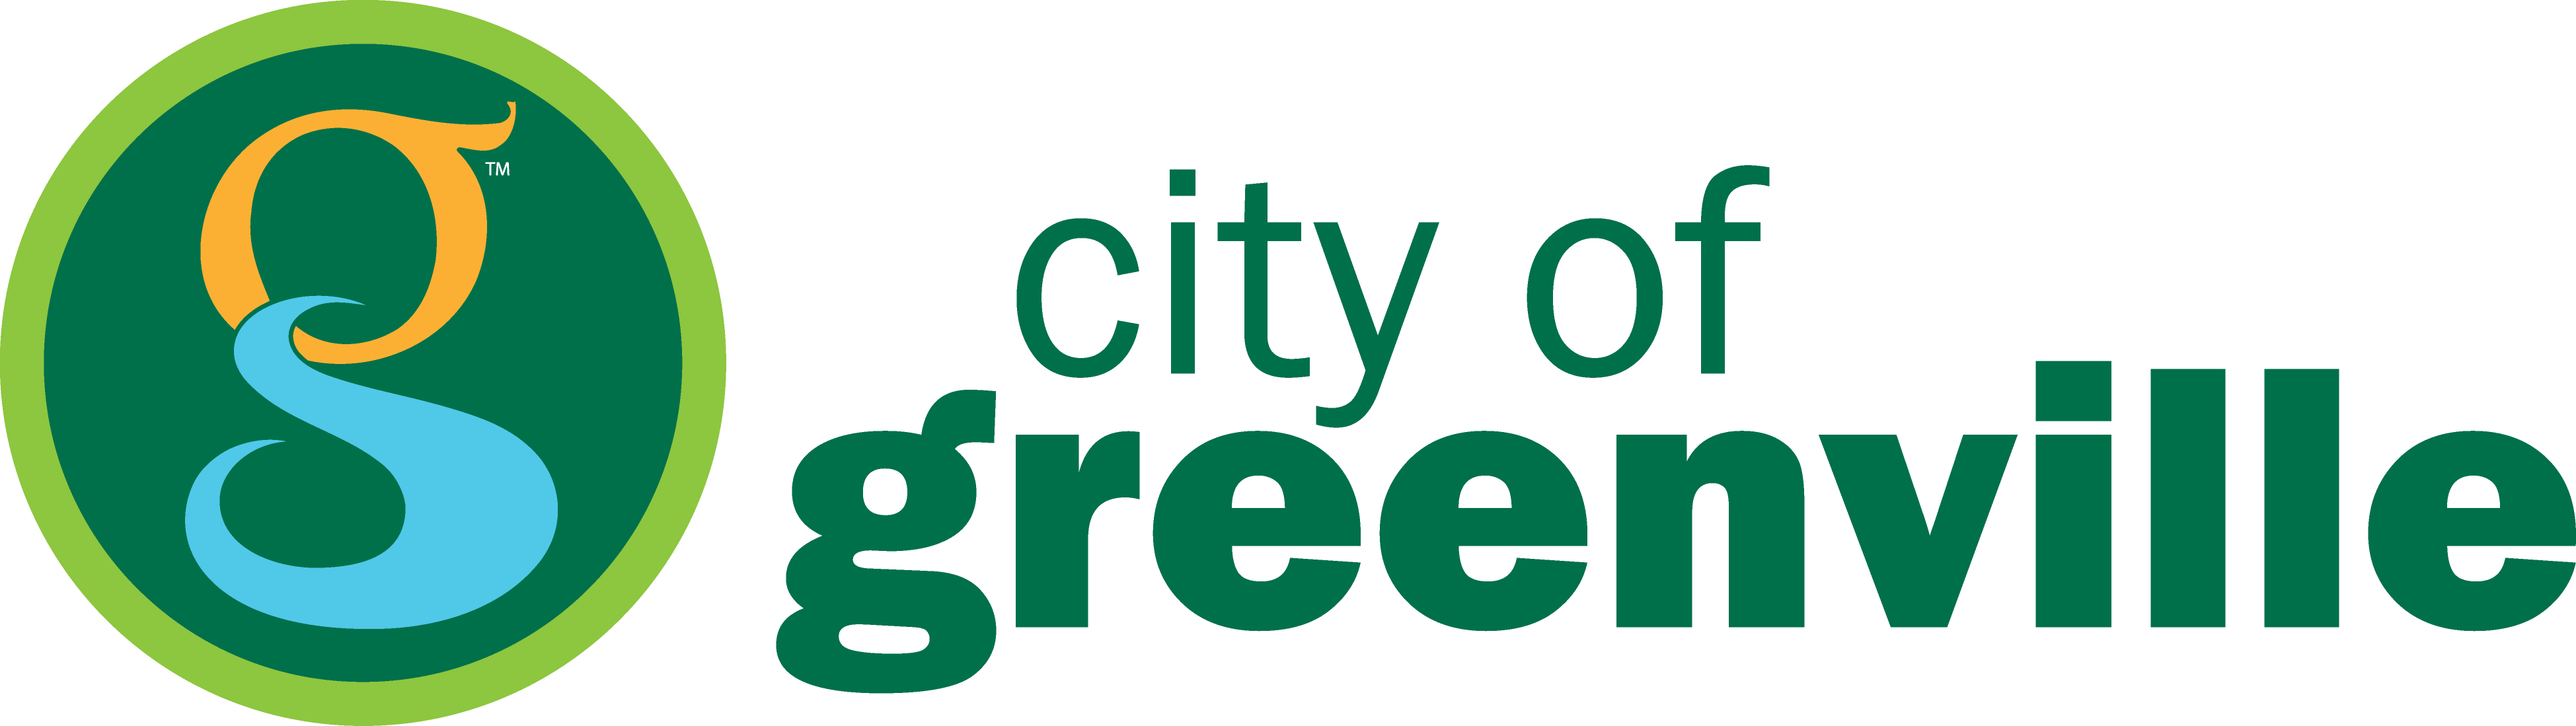 Greenville Logo - Meeting Planners | VisitGreenvilleSC